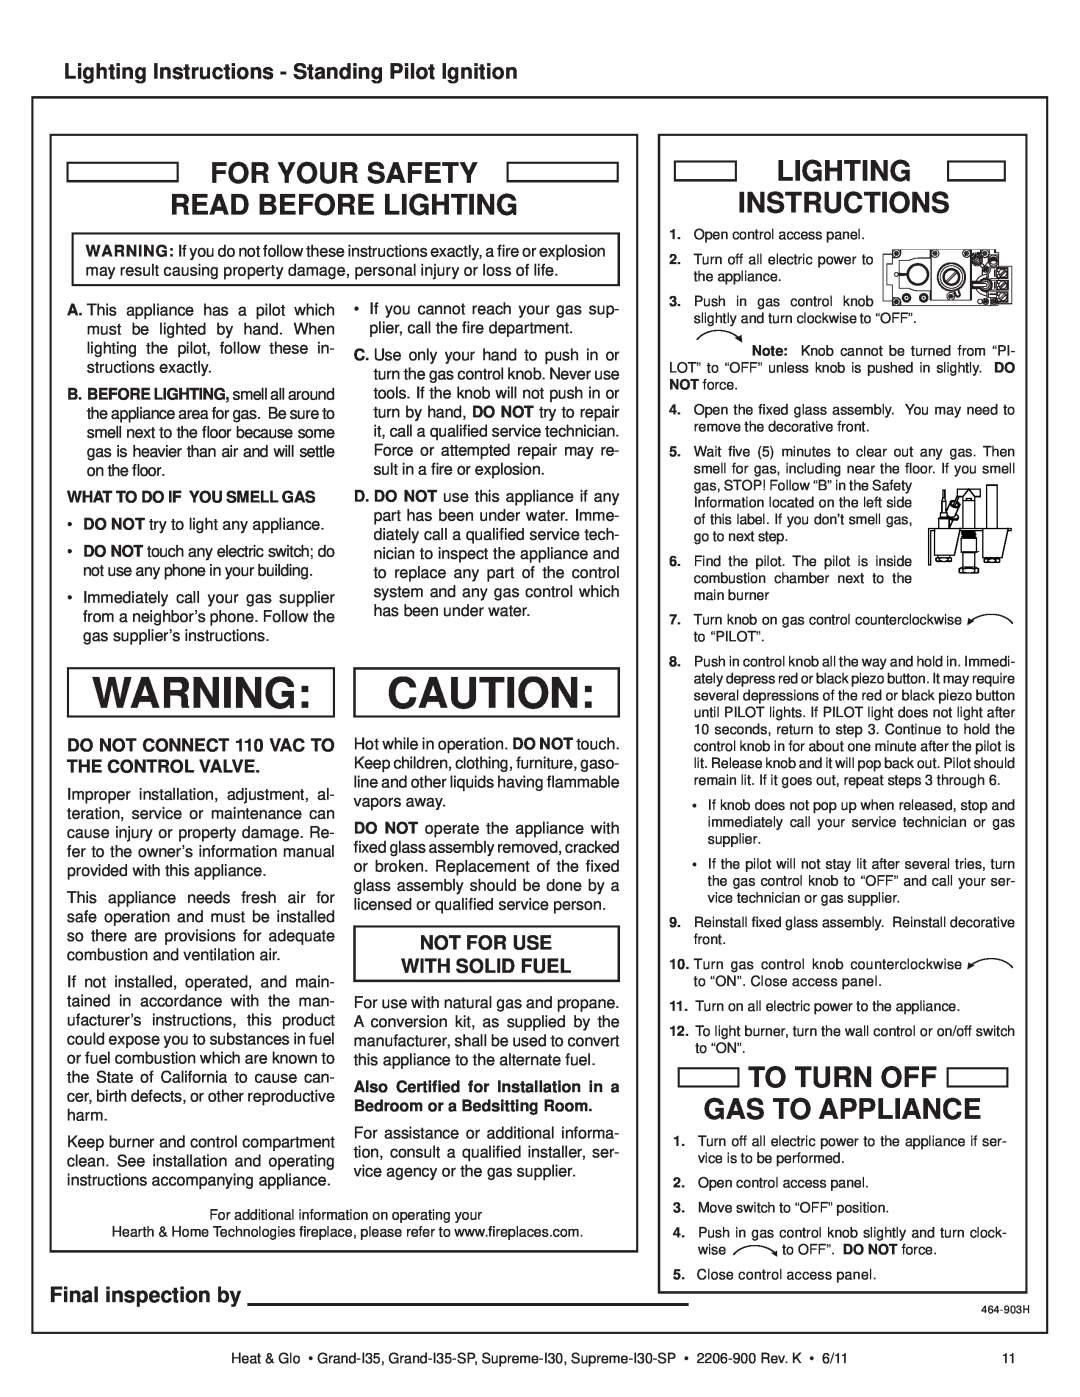 Heat & Glo LifeStyle GRAND-I35-SP, SUPREME-I30-SP Lighting Instructions - Standing Pilot Ignition, Warning Caution 